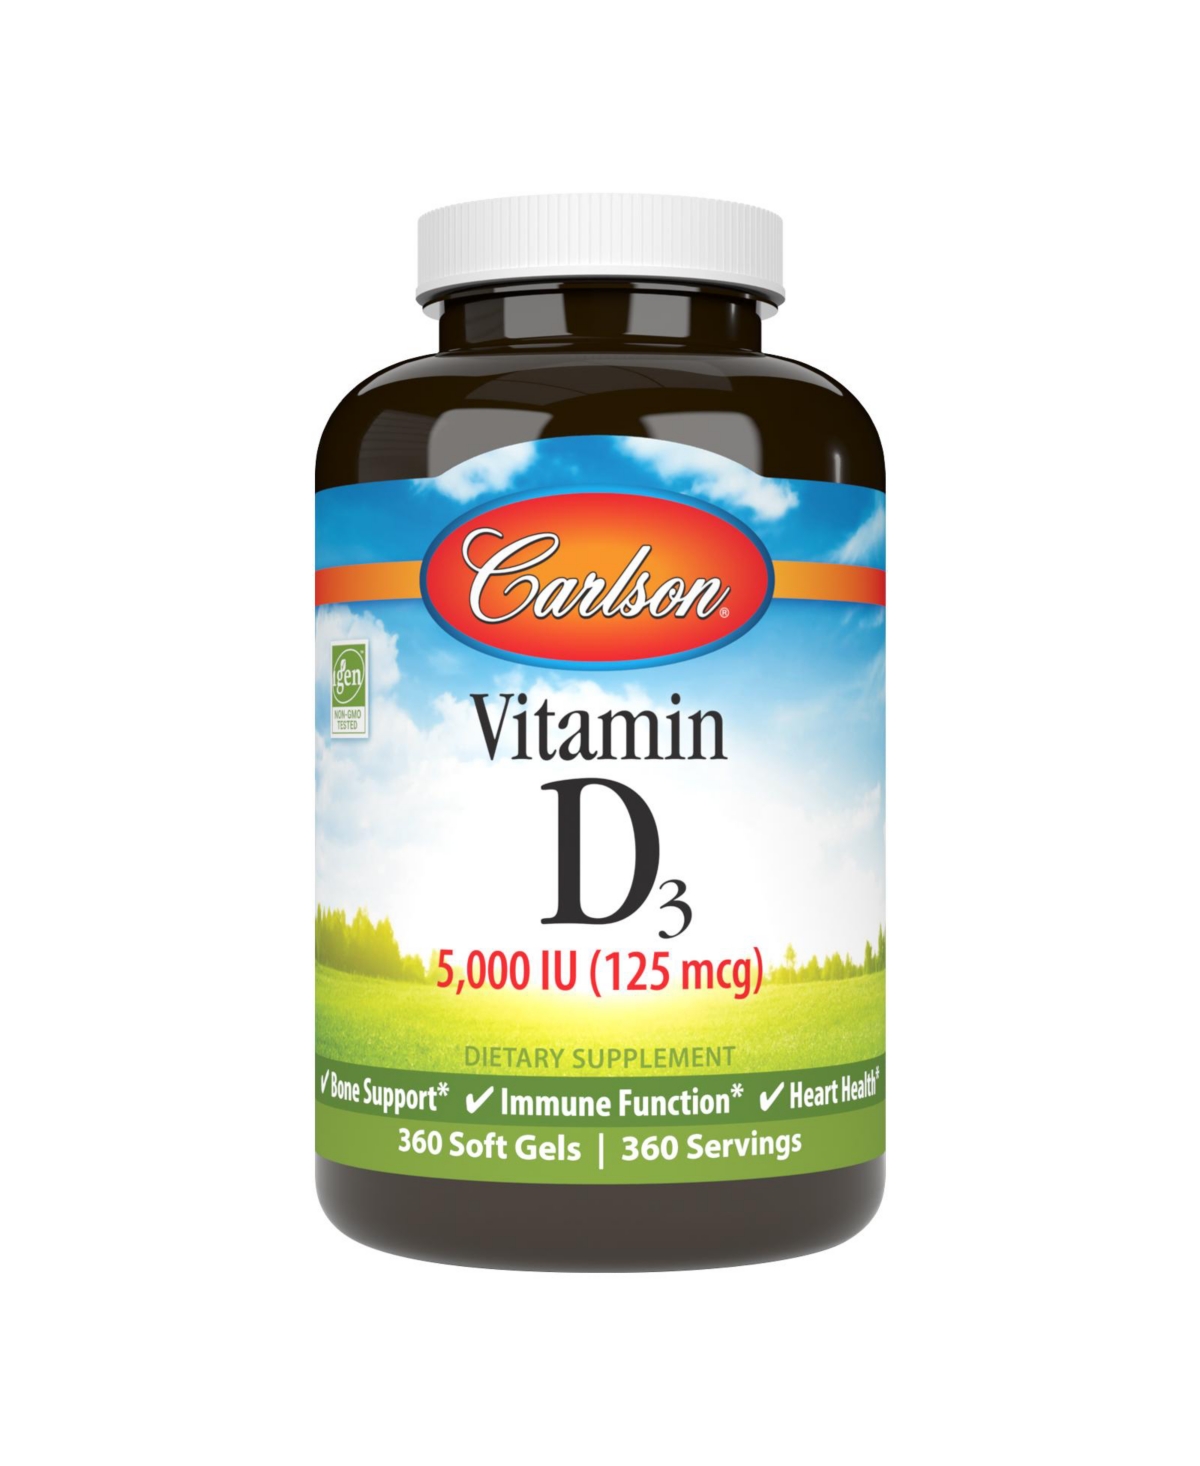 Carlson - Vitamin D3 5000 Iu (125 mcg), Cholecalciferol, Immune Support, 360 Softgels